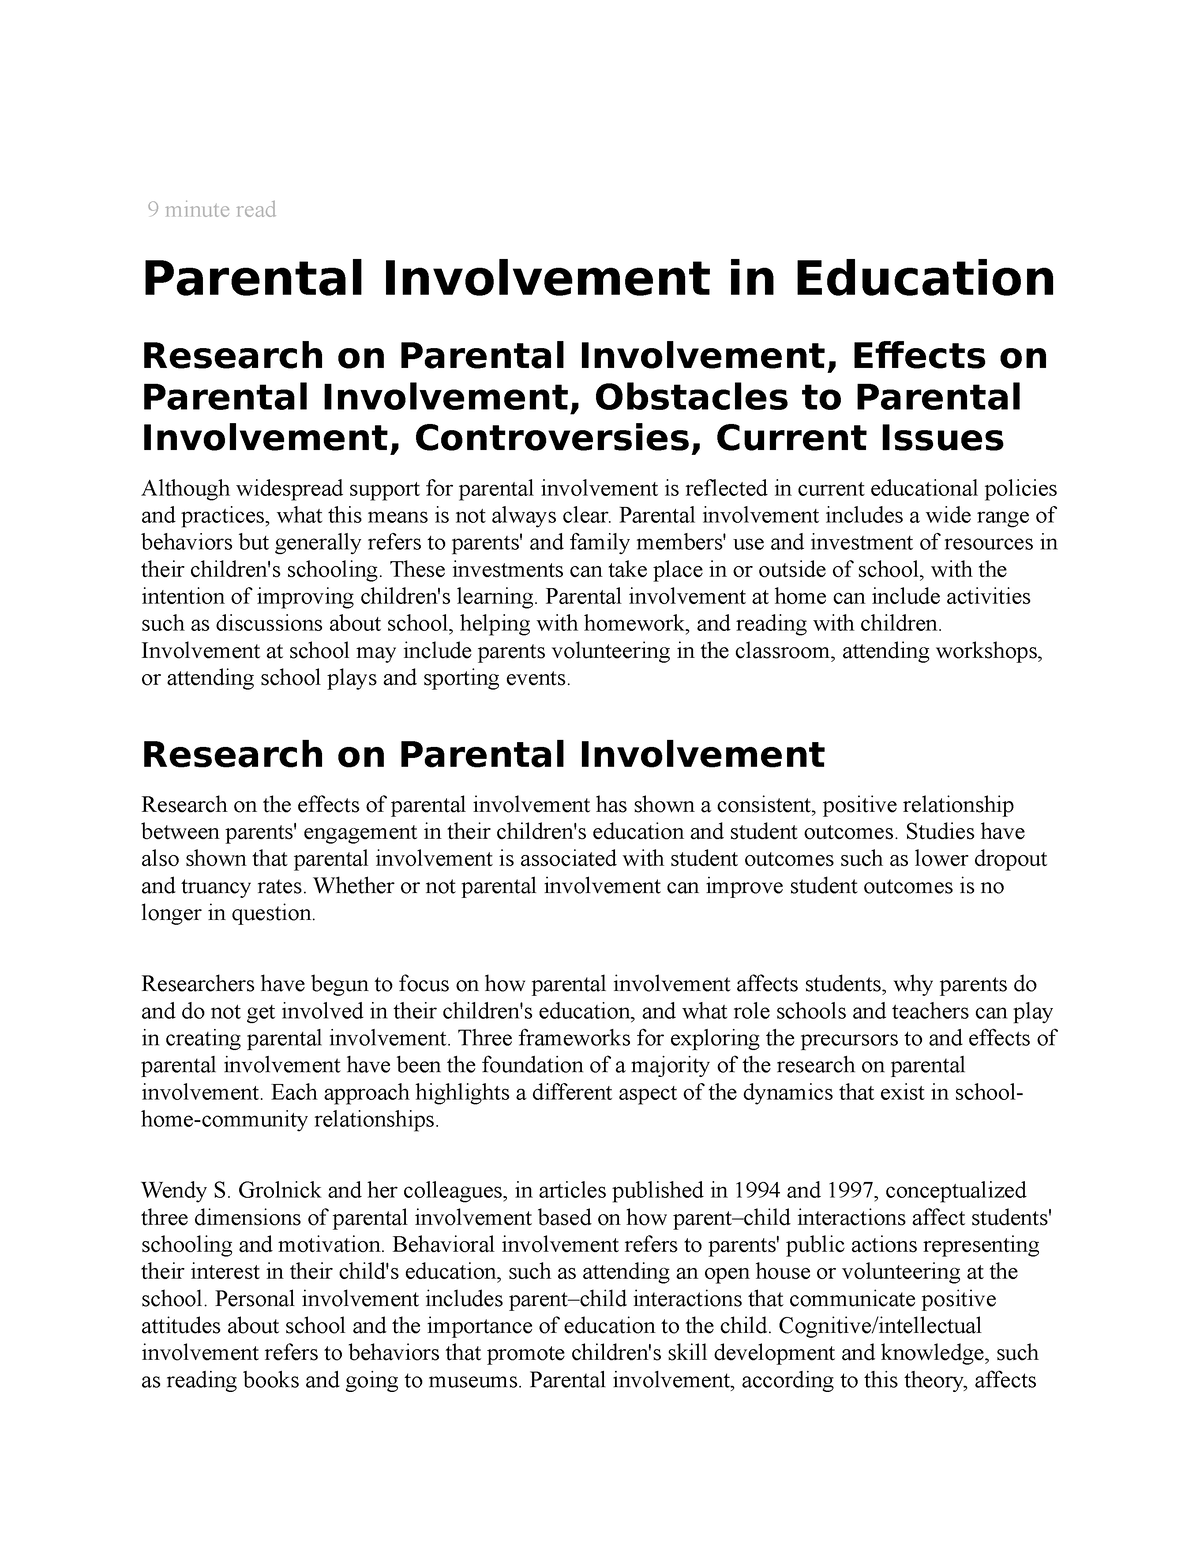 research on parental involvement